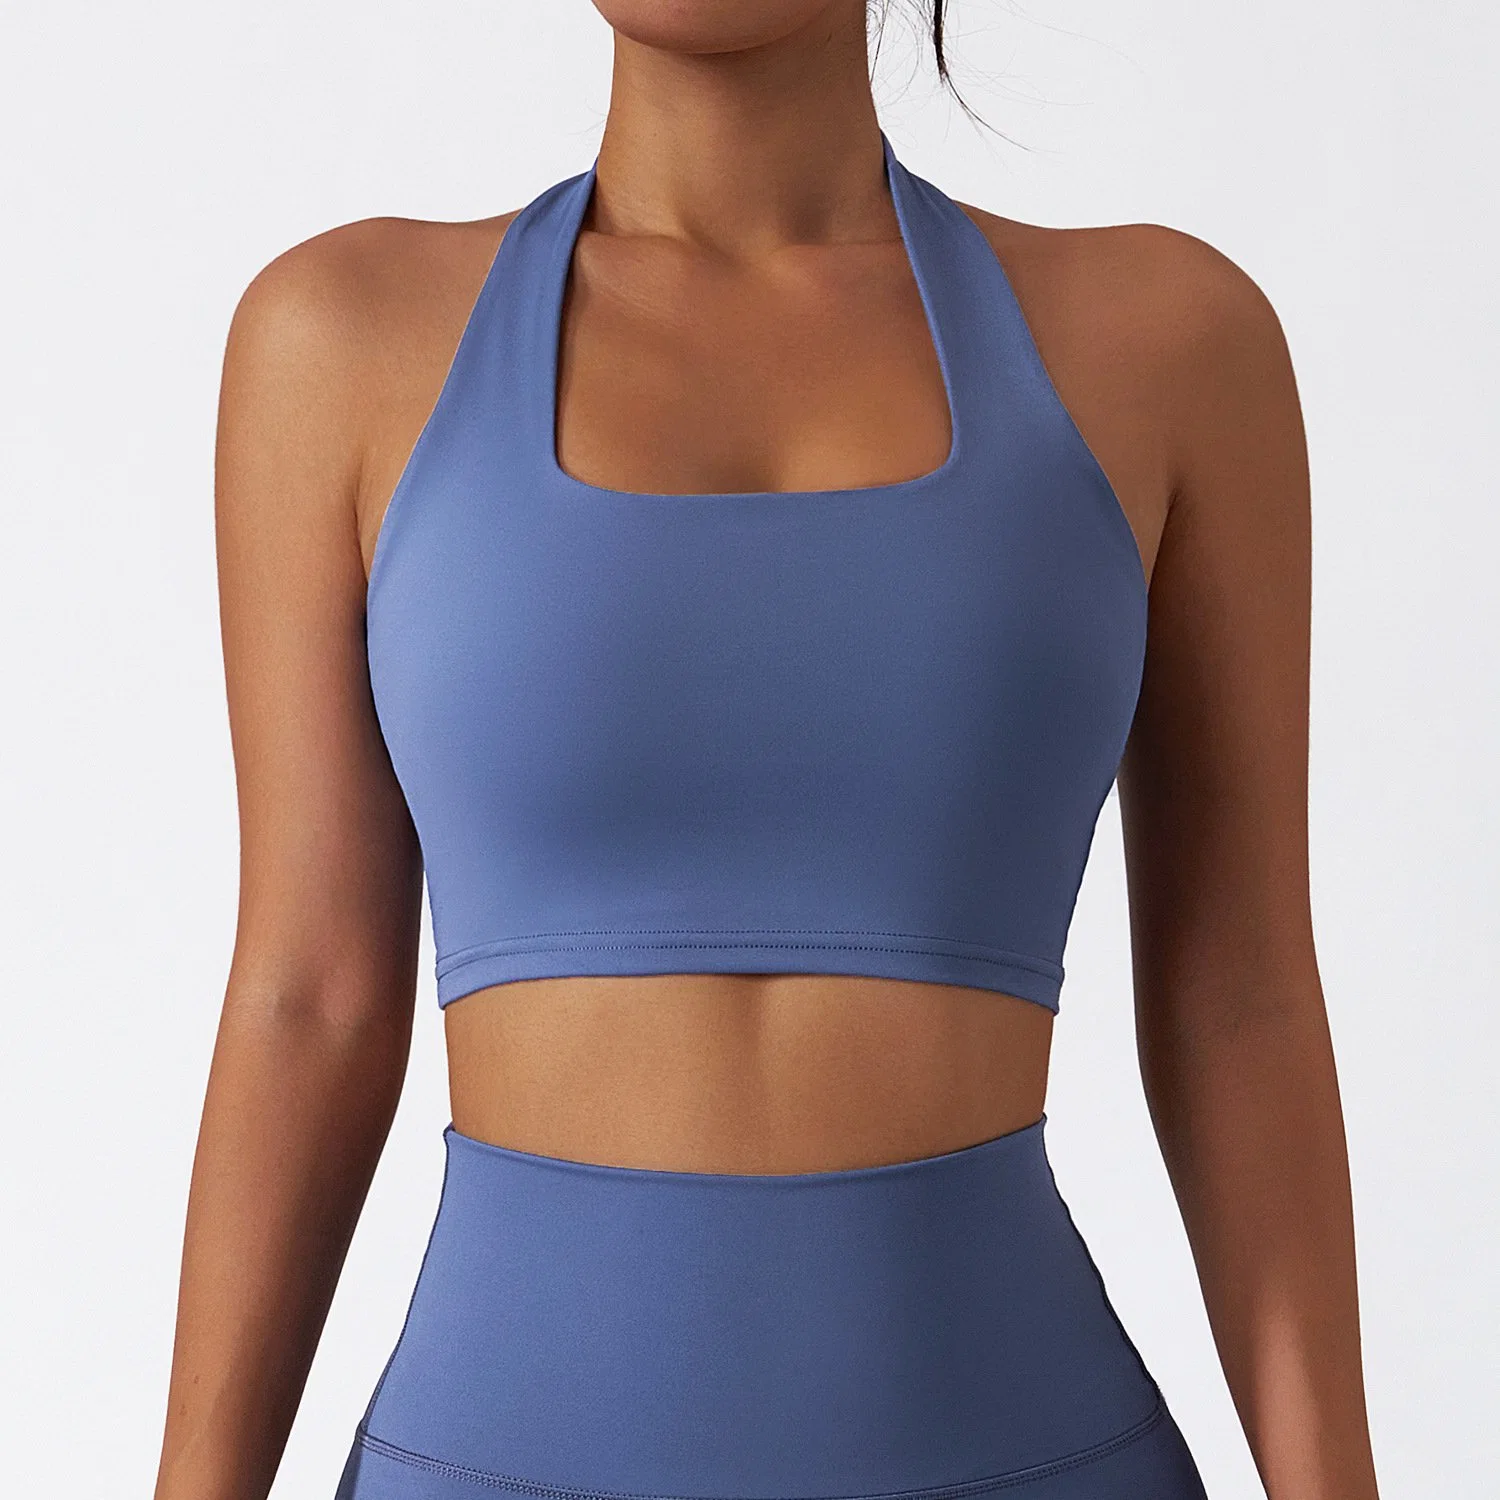 Wholesale/Supplier Yoga Bra Top, Custom Workout Fitness Women Running Gym Athletic Seamless Sport Bra